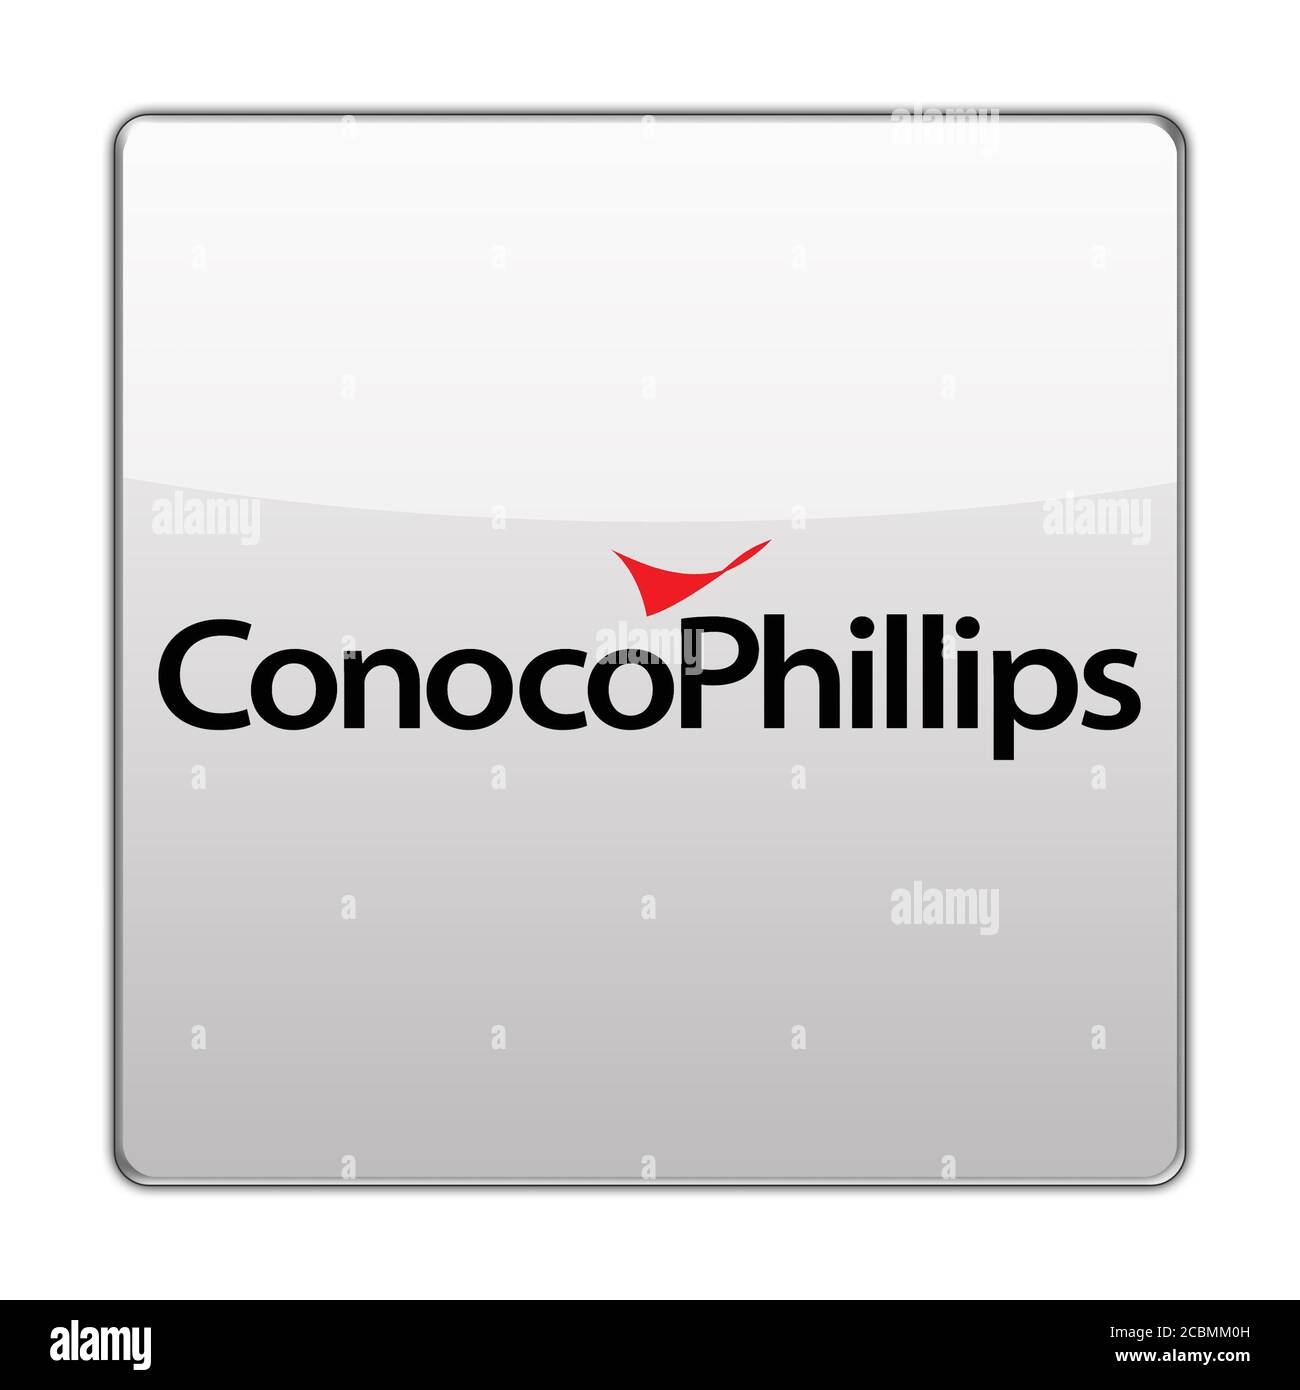 ConocoPhillips icon Stock Photo